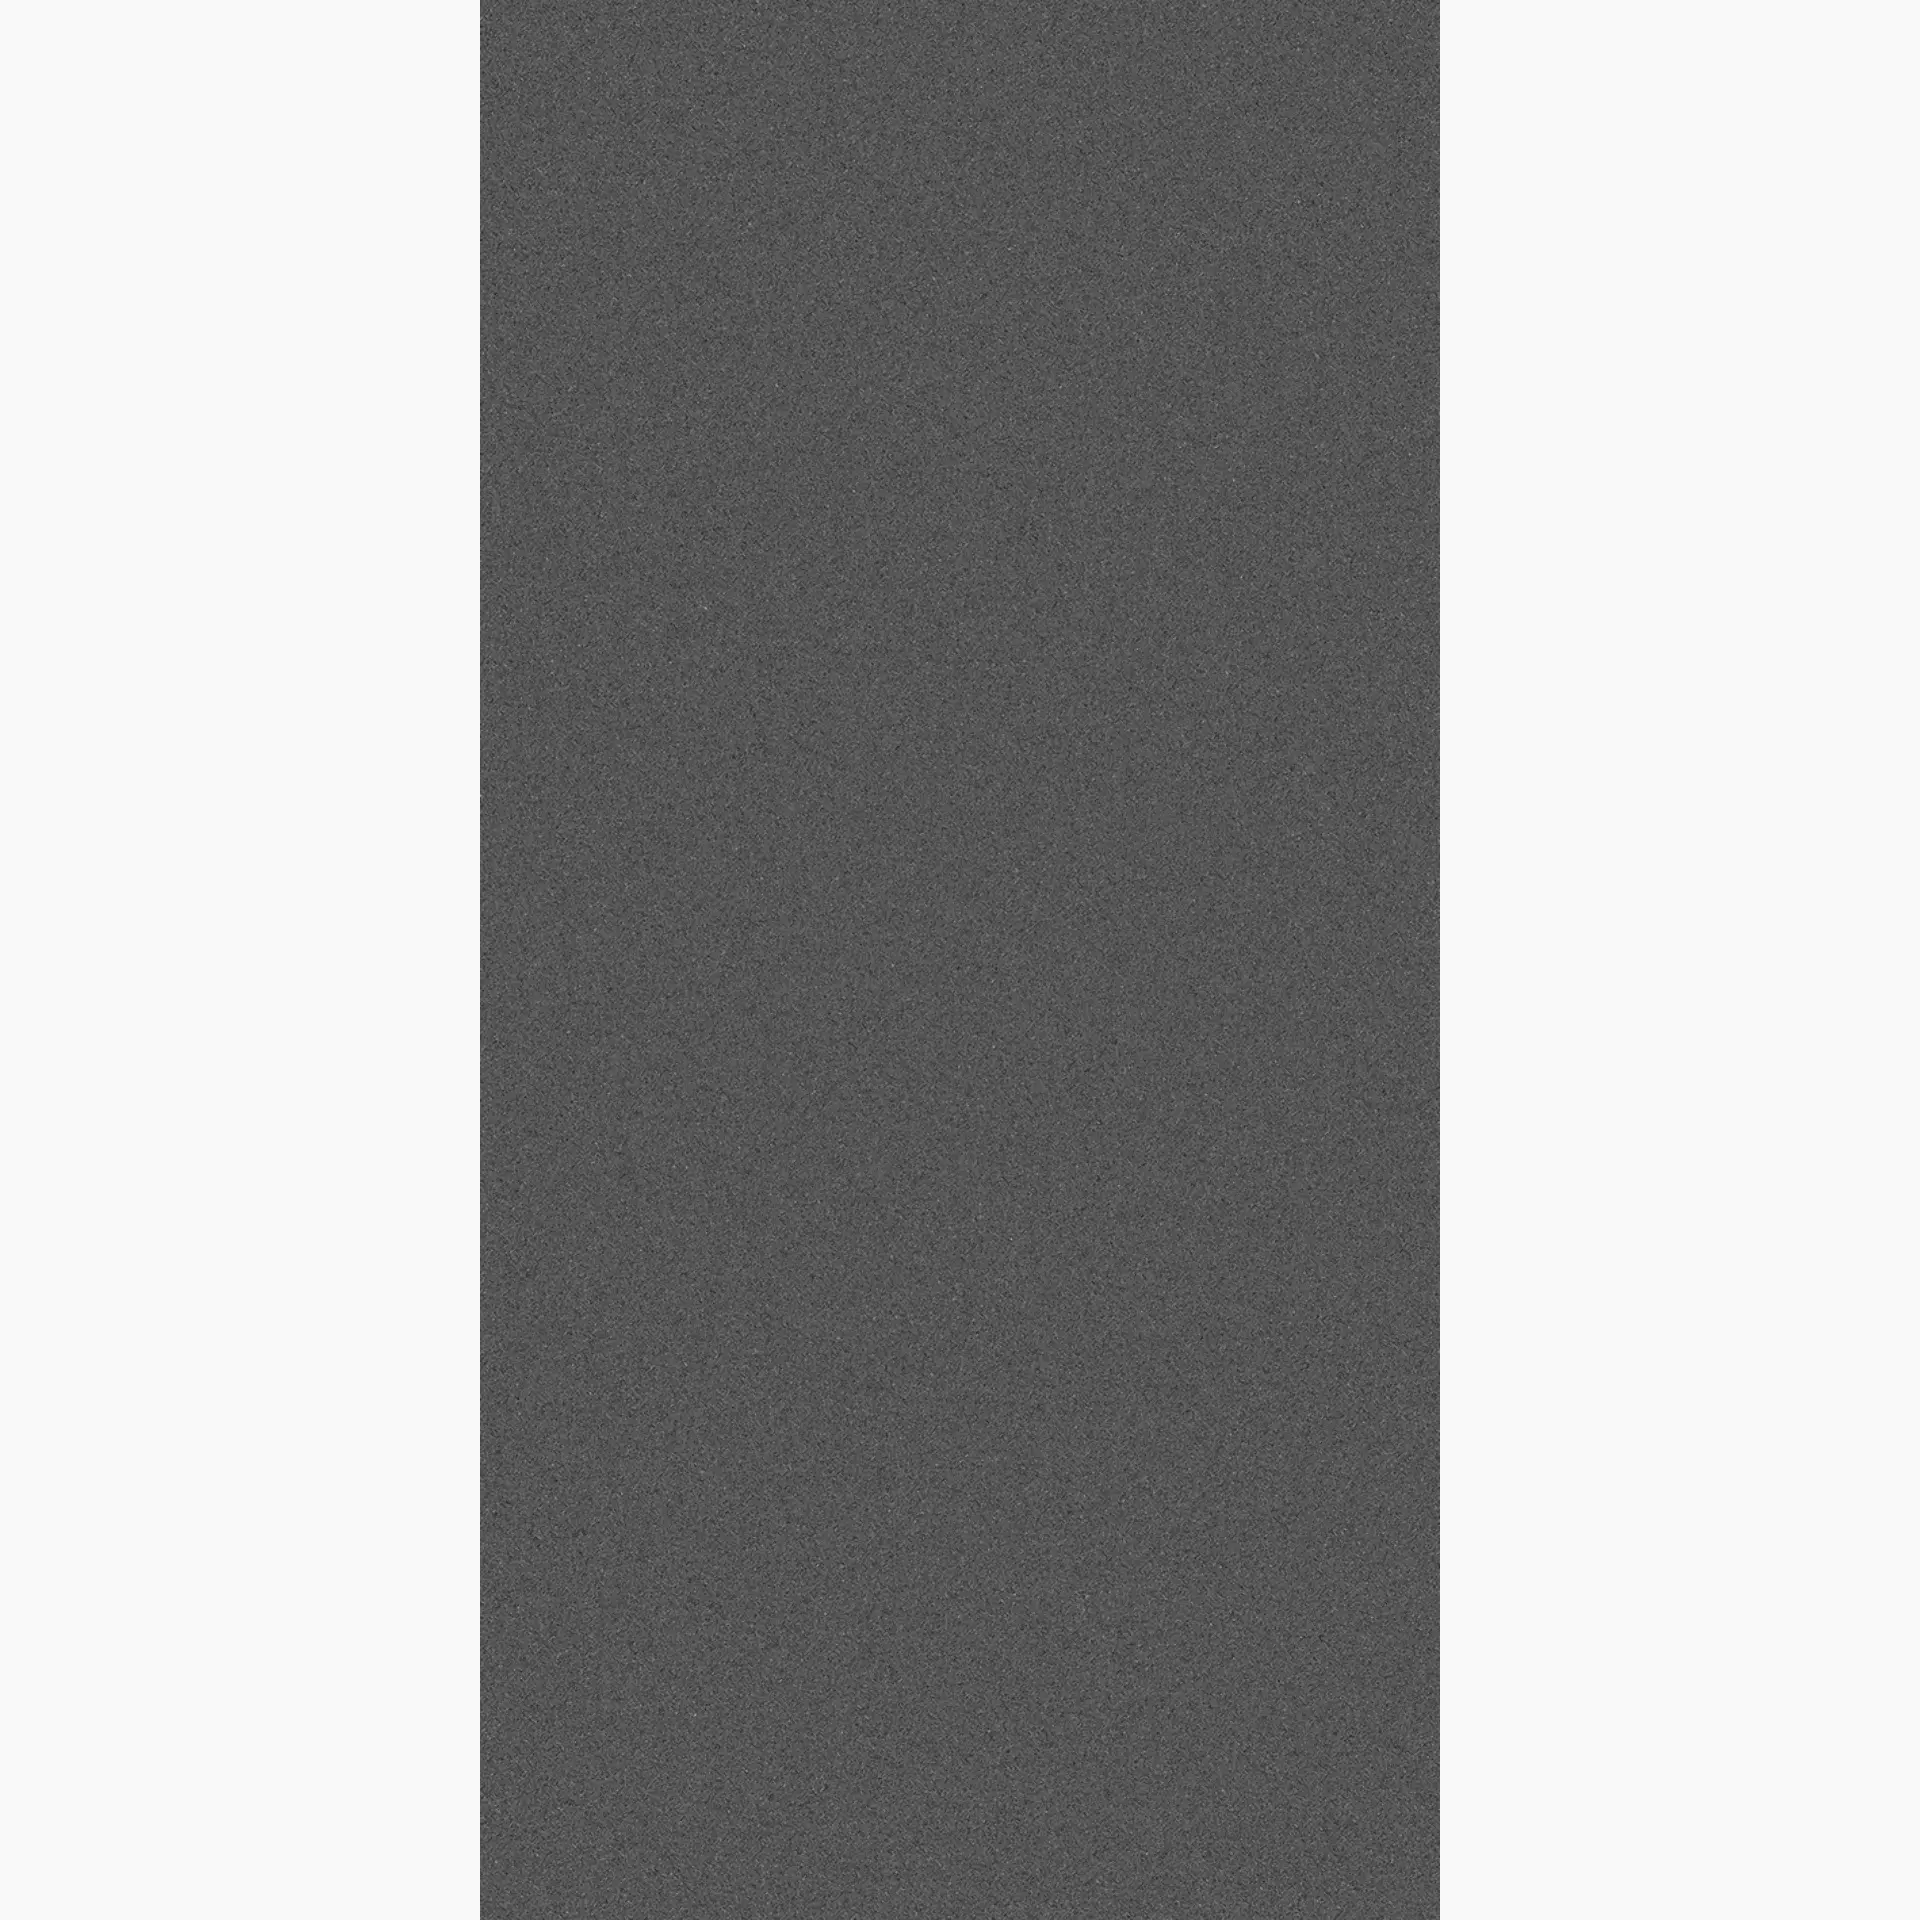 Villeroy & Boch Pure Line 2.0 Asphalt Grey Matt 2751-UL90 60x120cm rectified 12mm